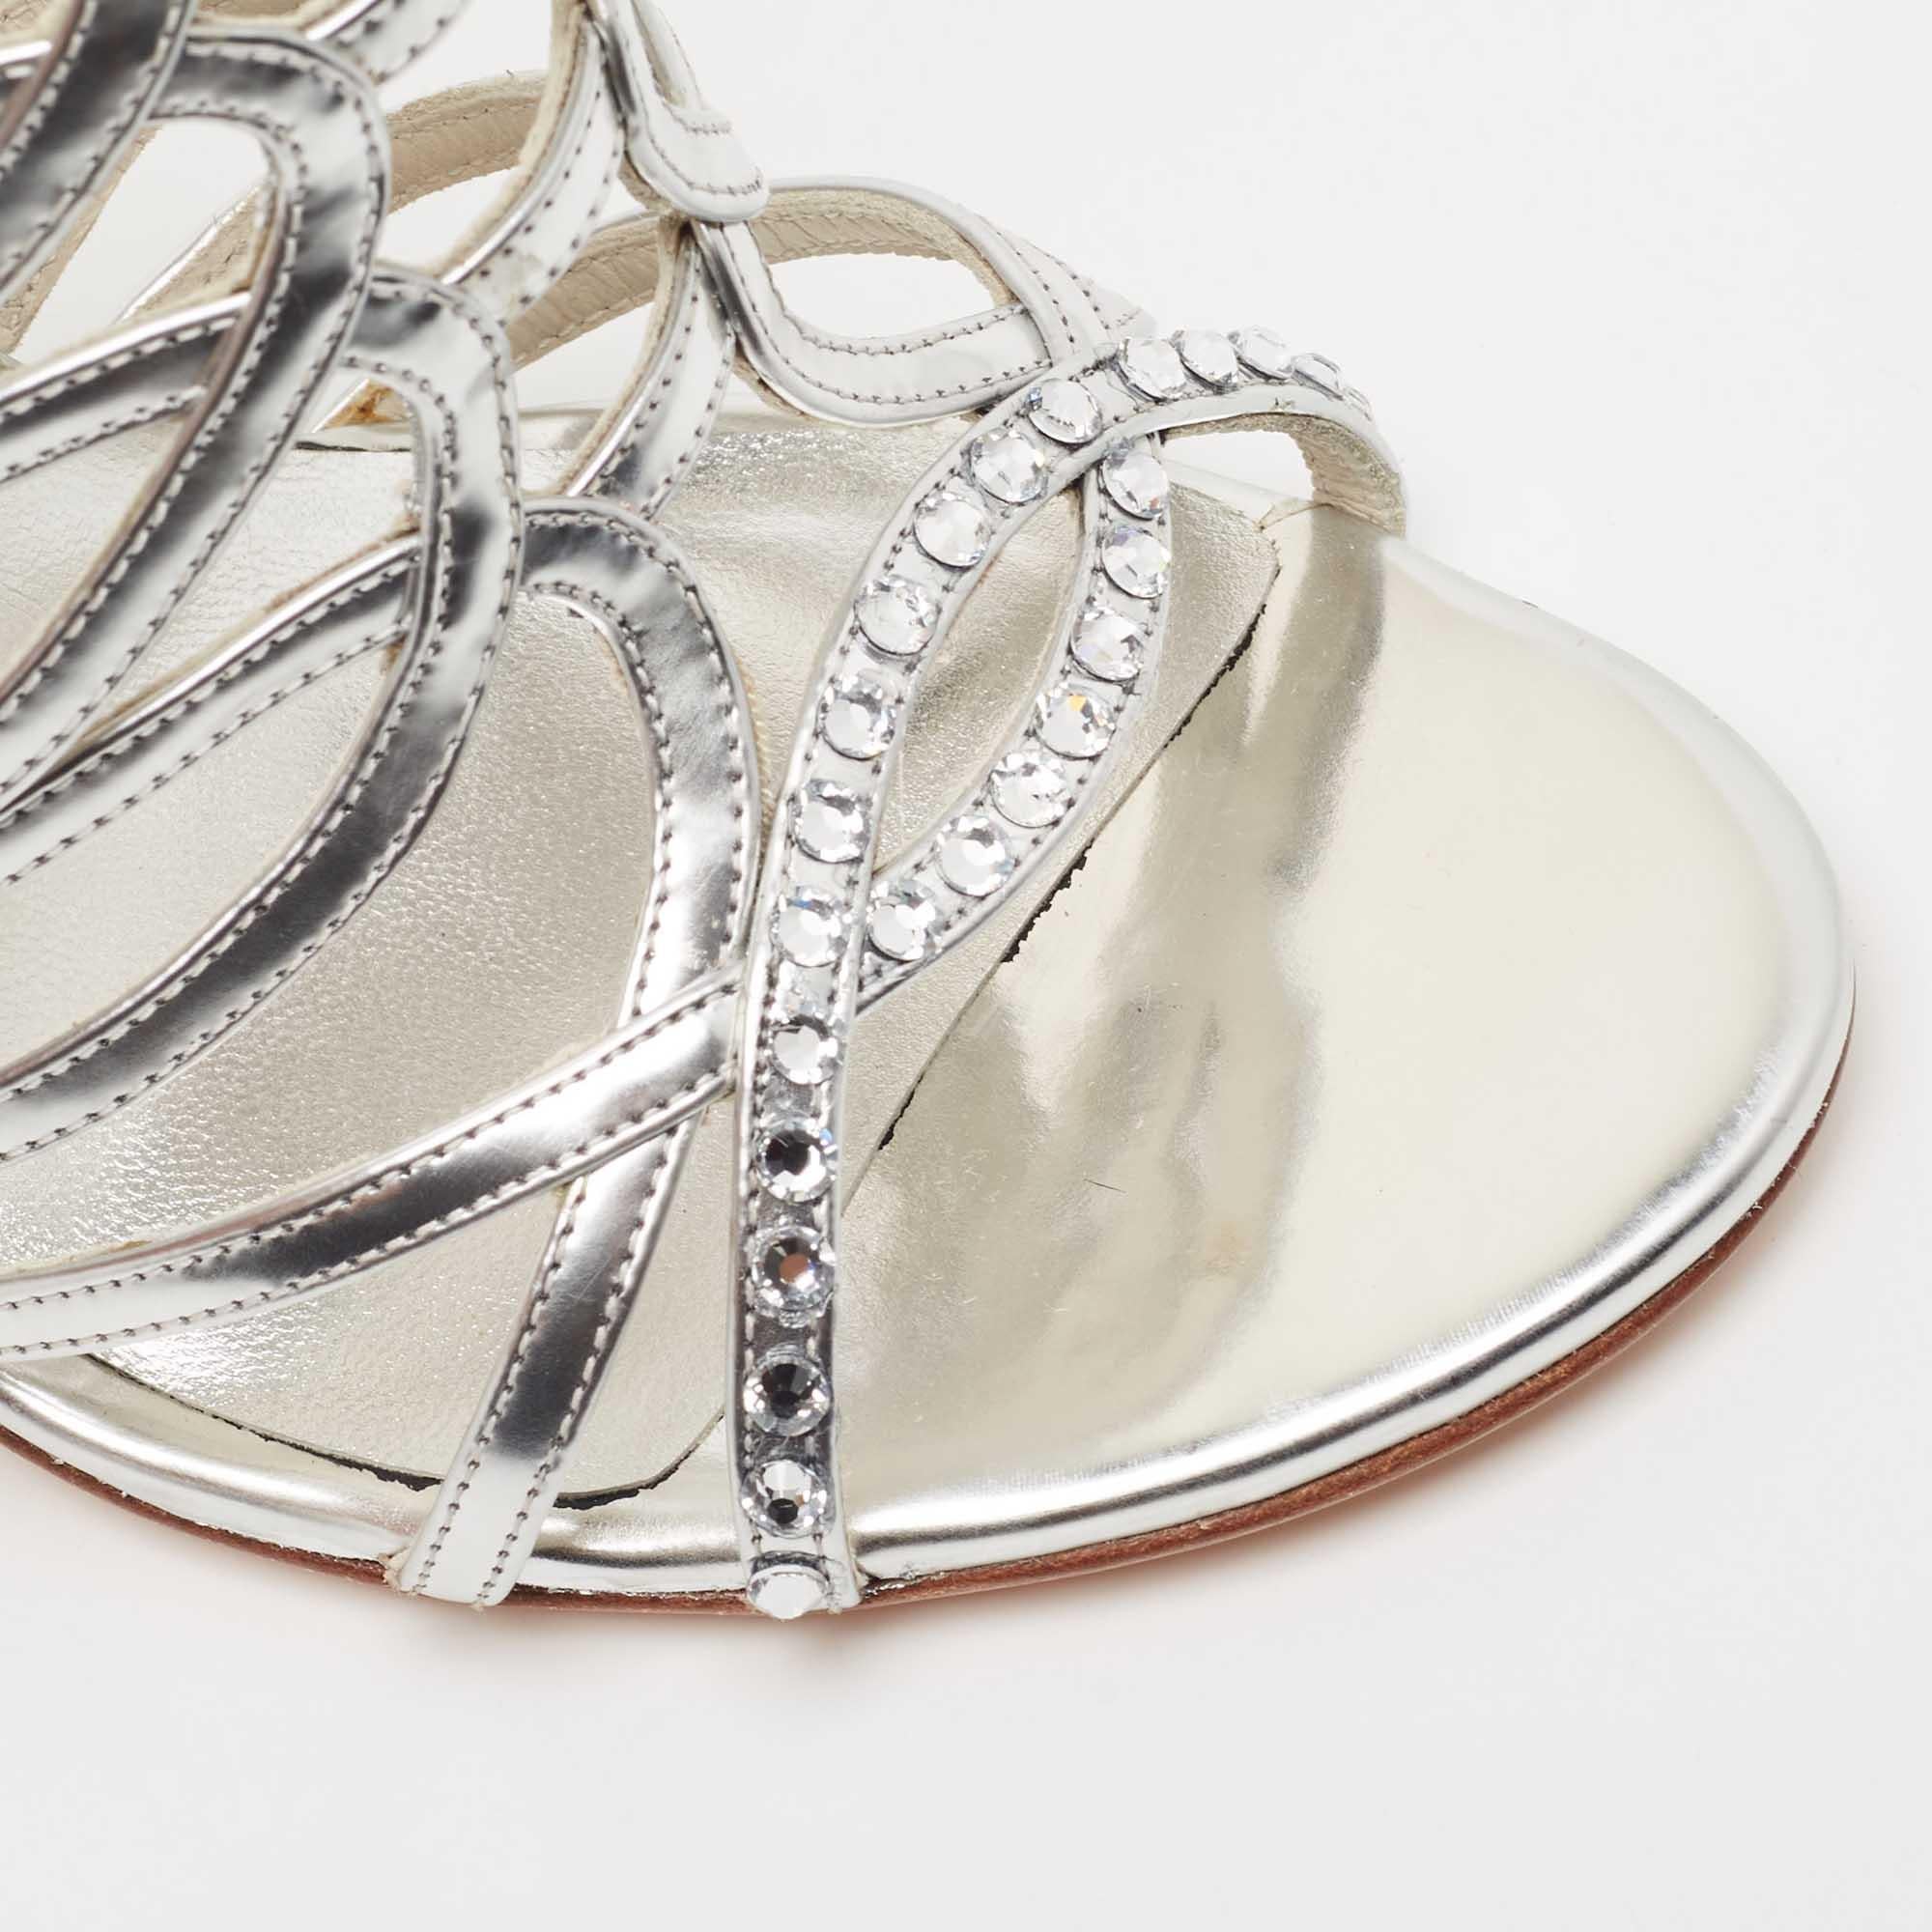 Women's Stuart Weitzman Metallic Silver Leather Crystal Embellished Strappy Sandals Size